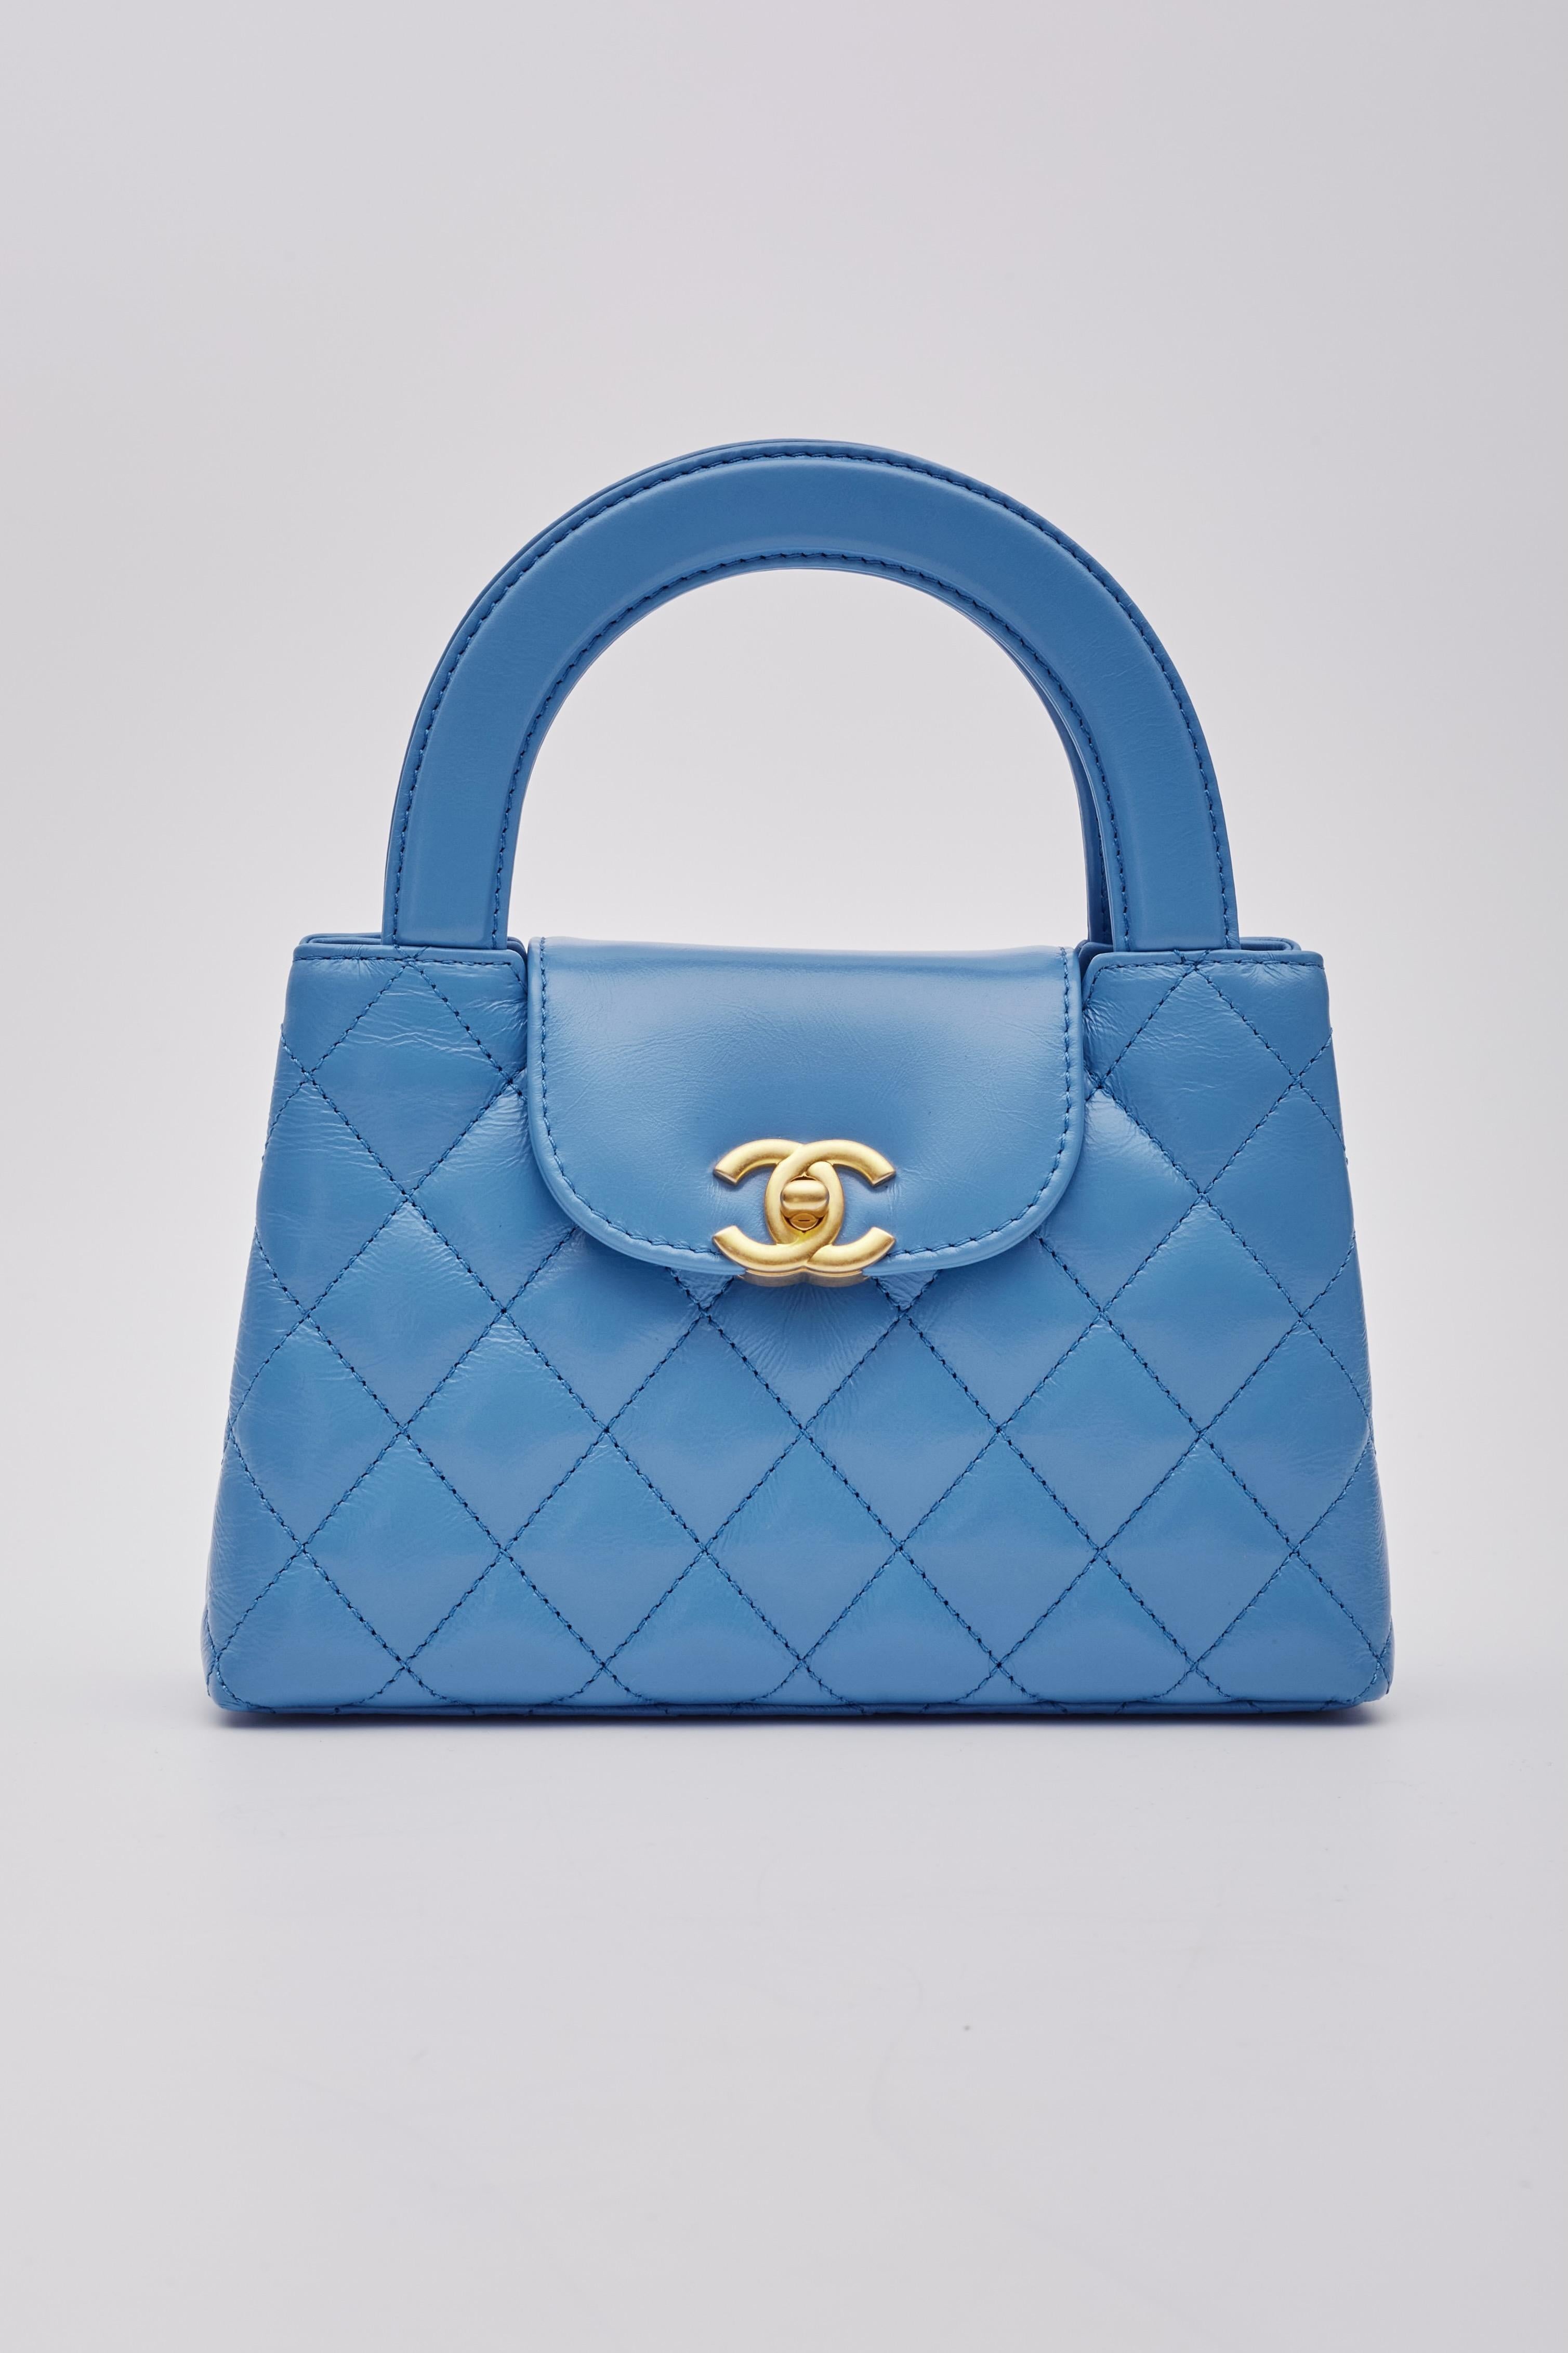 Women's Chanel Blue Calfskin Mini Shopping Kelly Bag For Sale